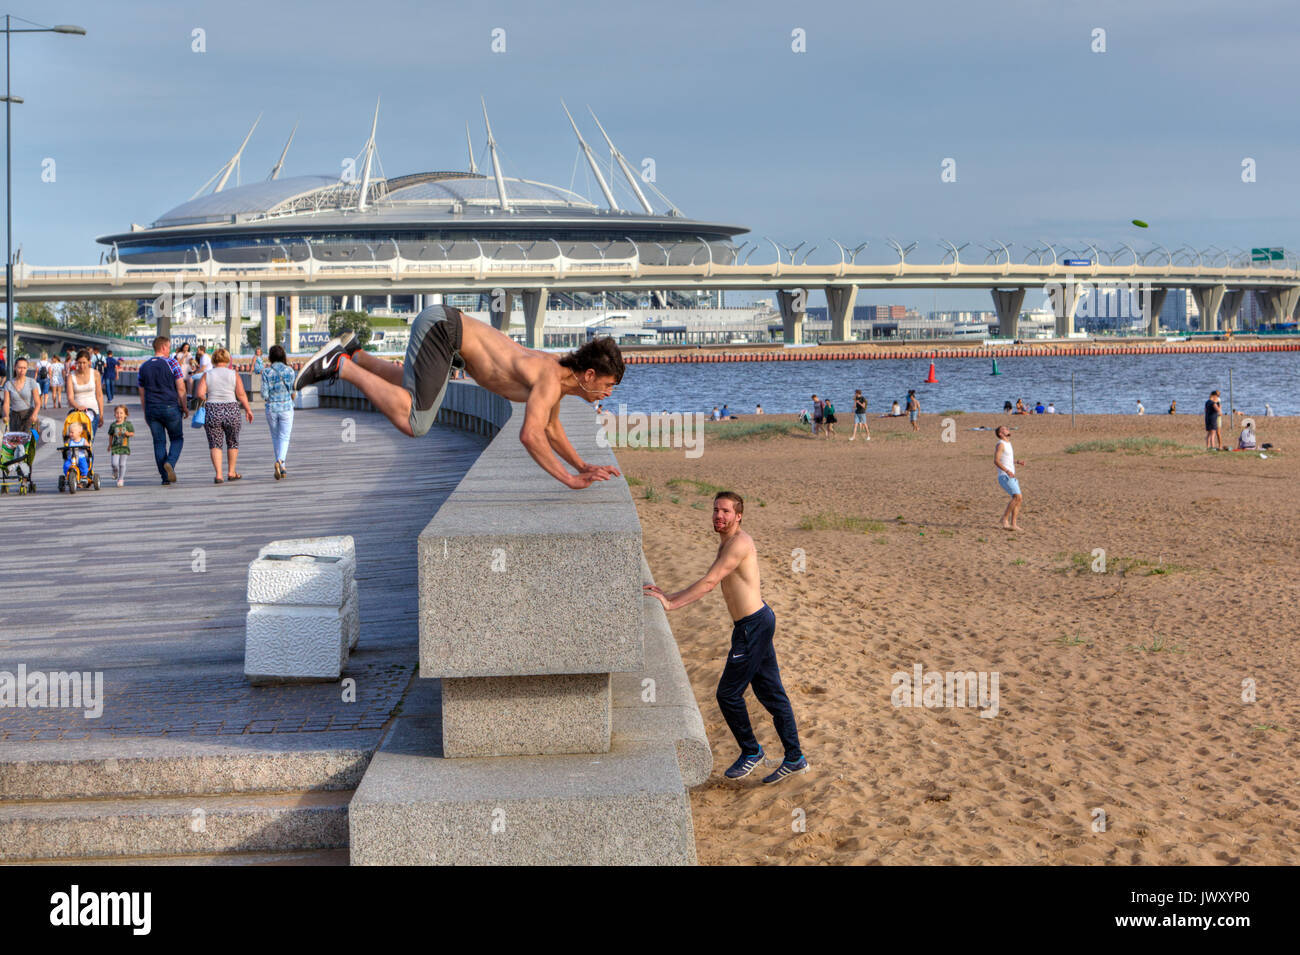 San Pietroburgo, Russia - 1 Agosto 2017: Parco di San Pietroburgo 300 anniversario, giovane uomo fare parkour tricking e freerunning sulla spiaggia. Foto Stock